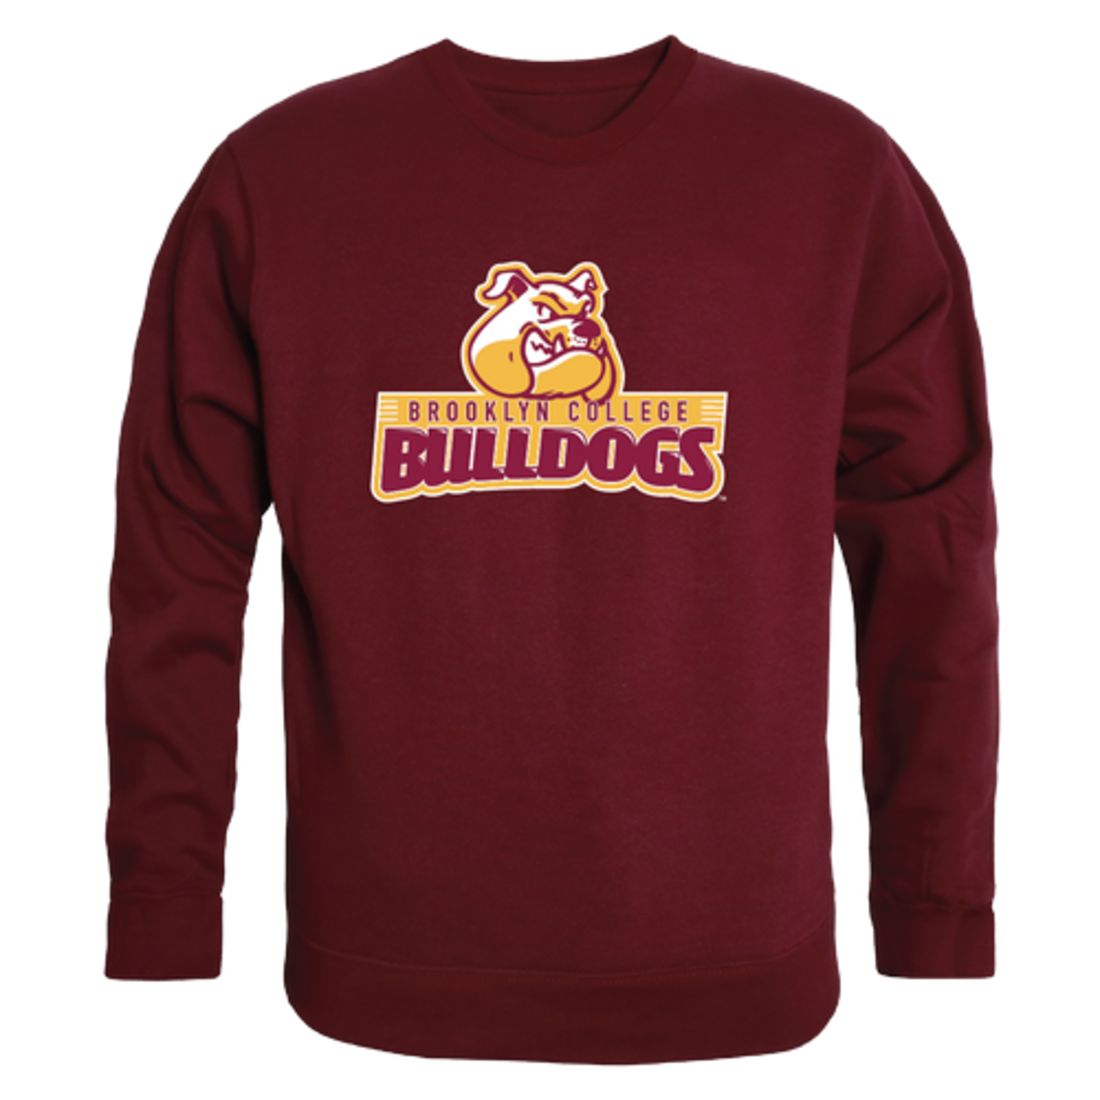 Brooklyn-College-Bulldogs-Collegiate-Fleece-Crewneck-Pullover-Sweatshirt